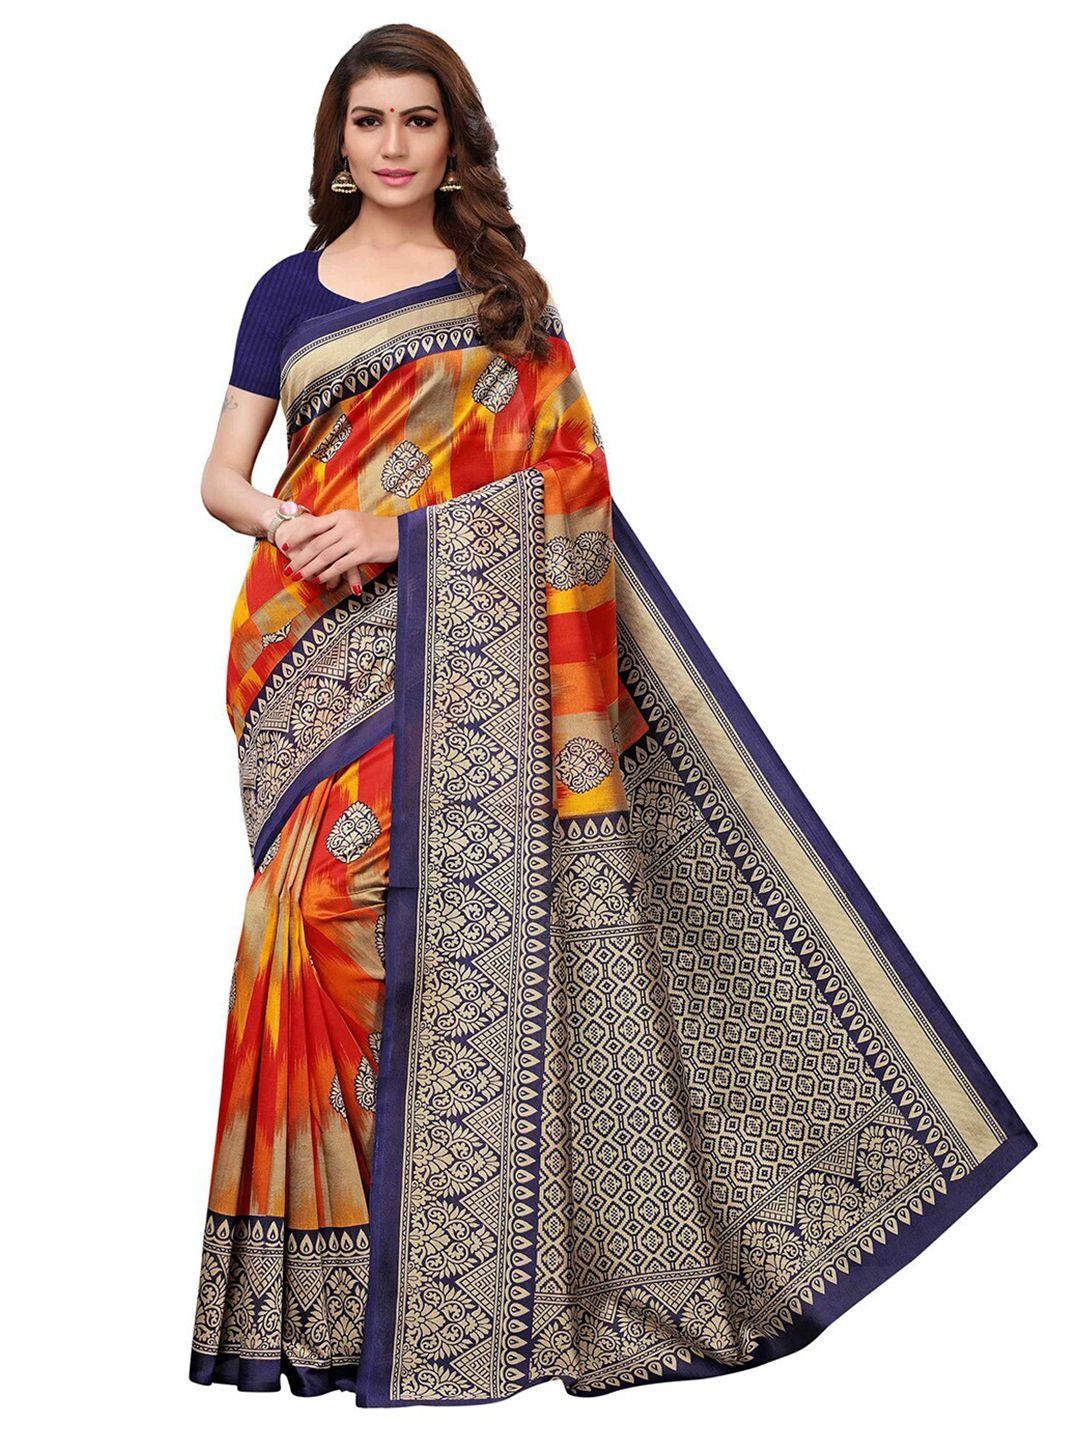 moksha designs orange & blue ethnic motifs handloom pure silk kanjeevaram saree